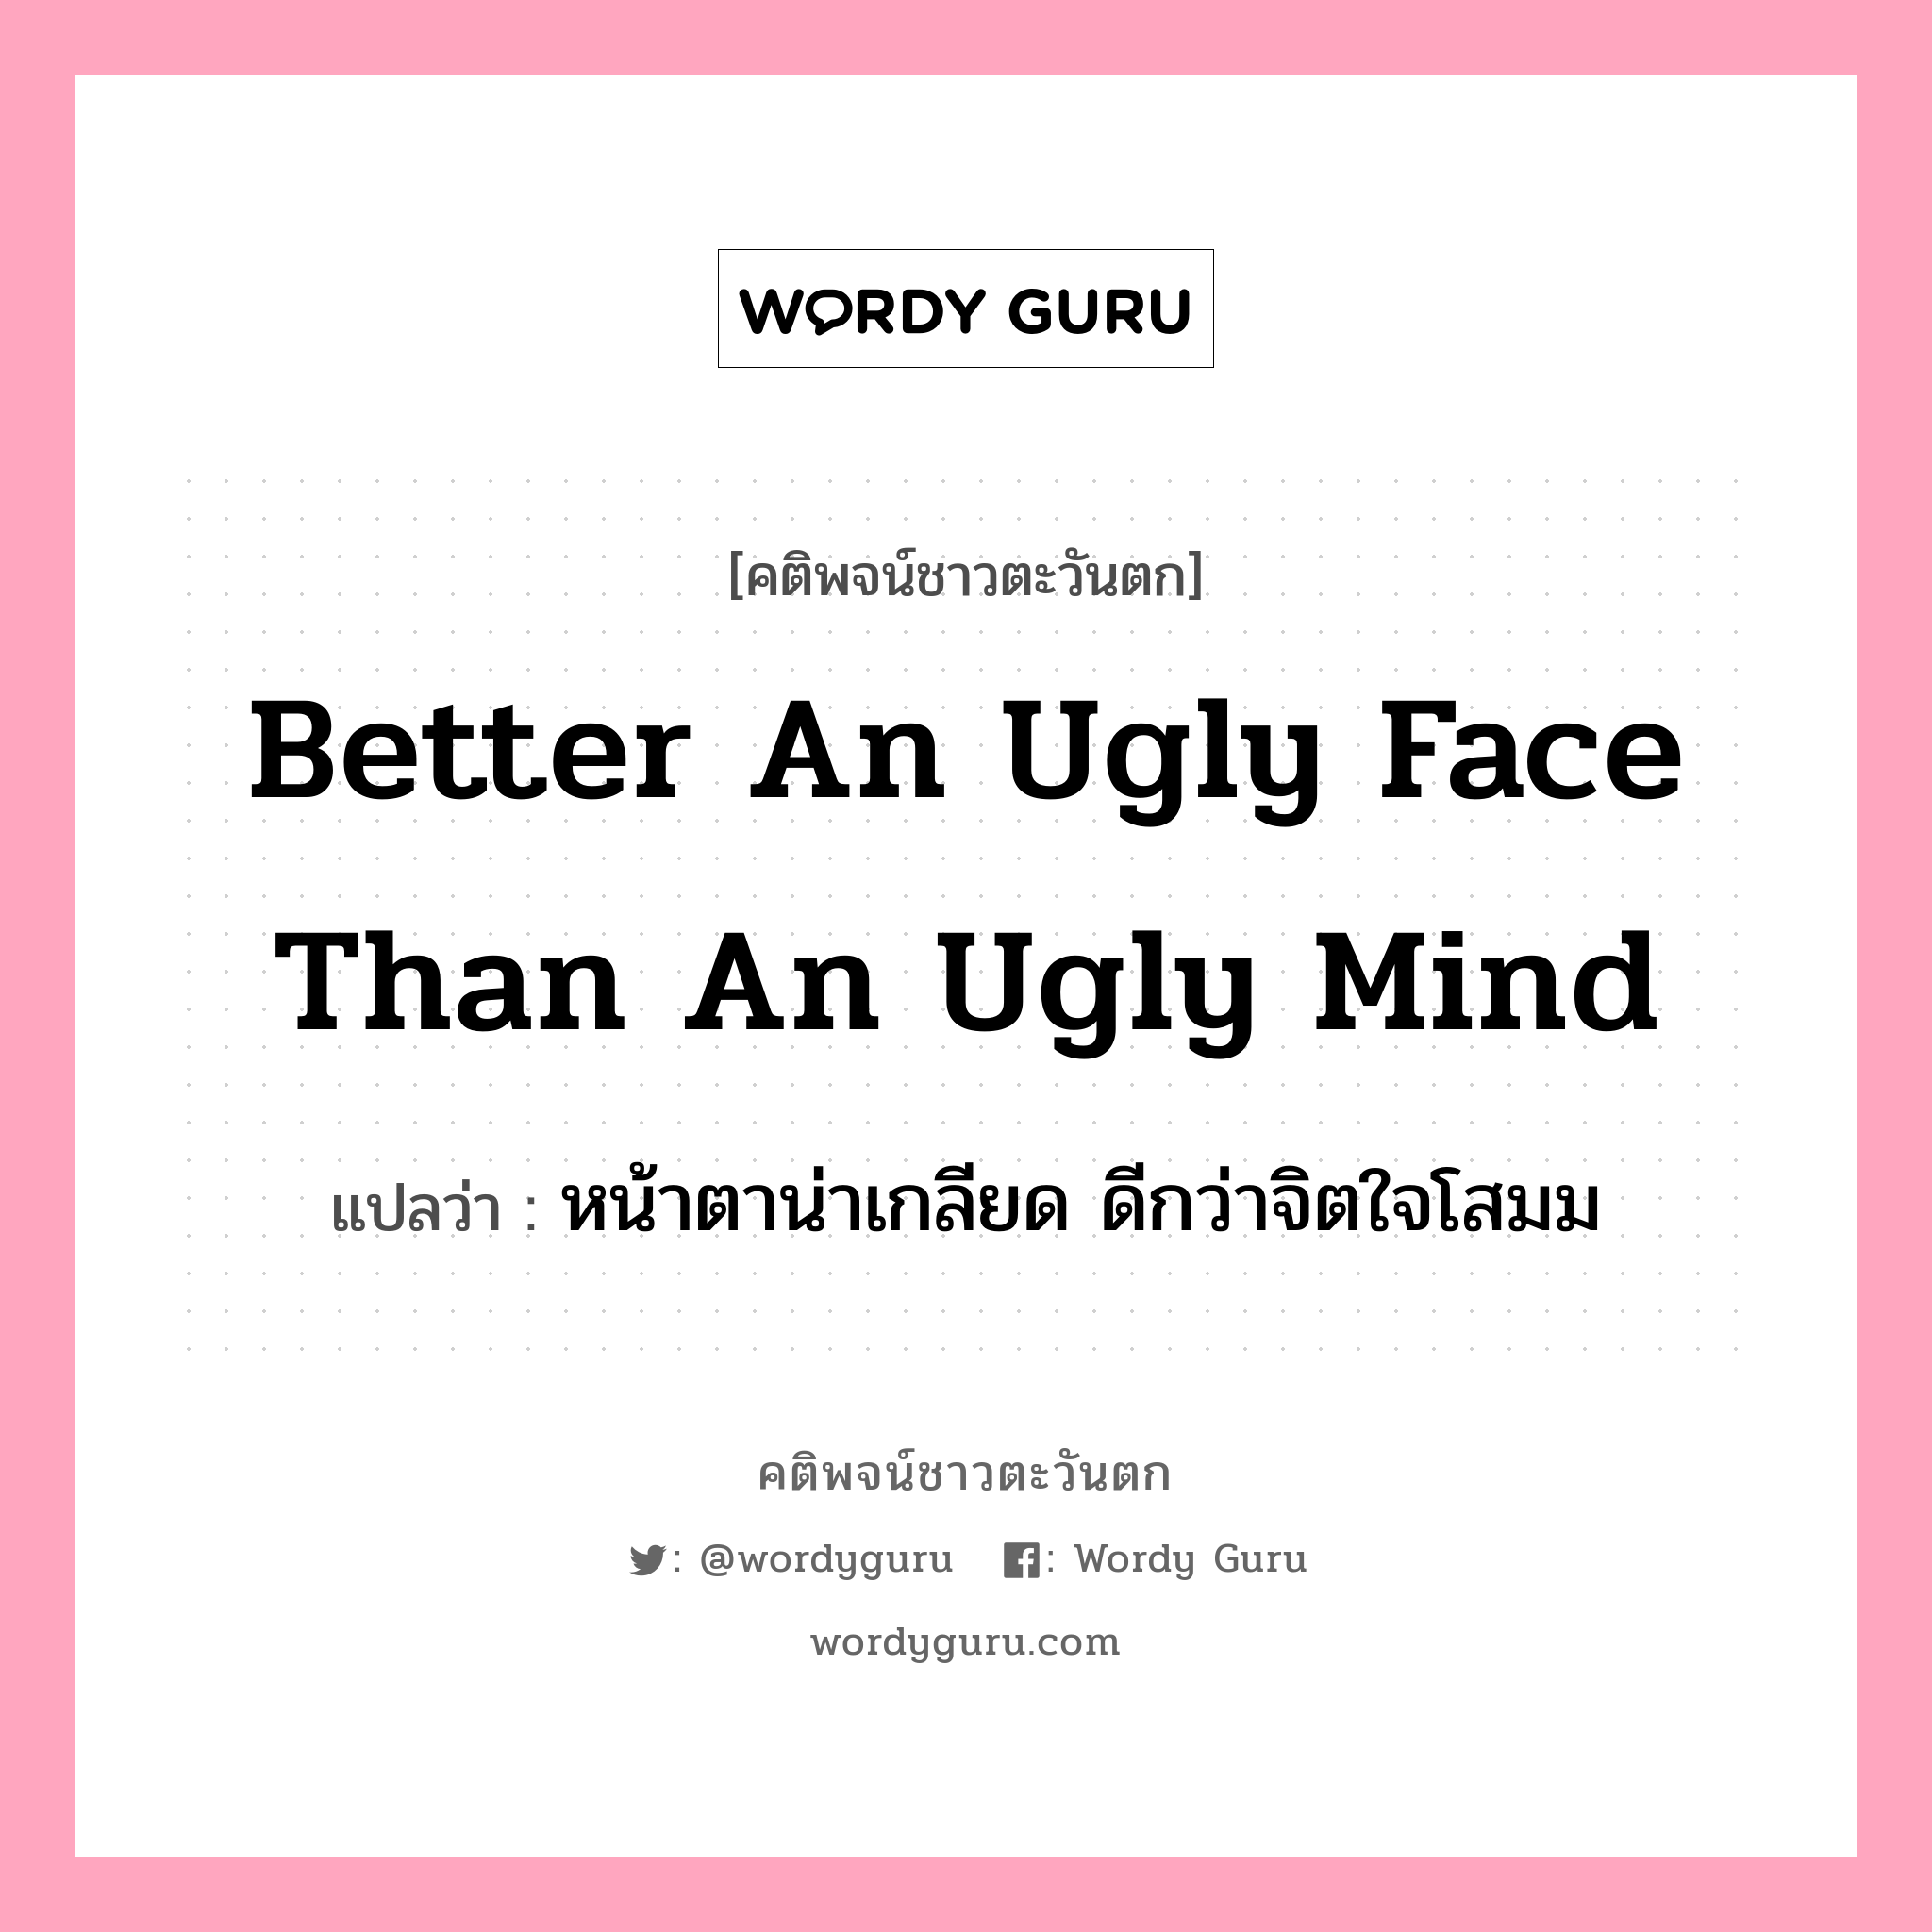 Better an ugly face than an ugly mind, คติพจน์ชาวตะวันตก Better an ugly face than an ugly mind แปลว่า หน้าตาน่าเกลียด ดีกว่าจิตใจโสมม